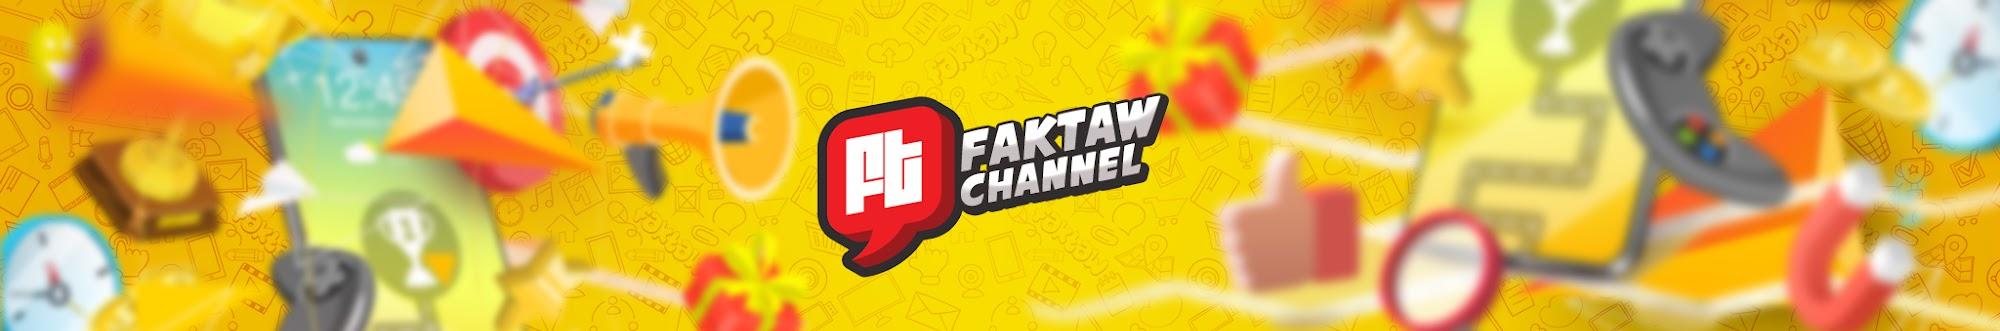 Faktaw Channel